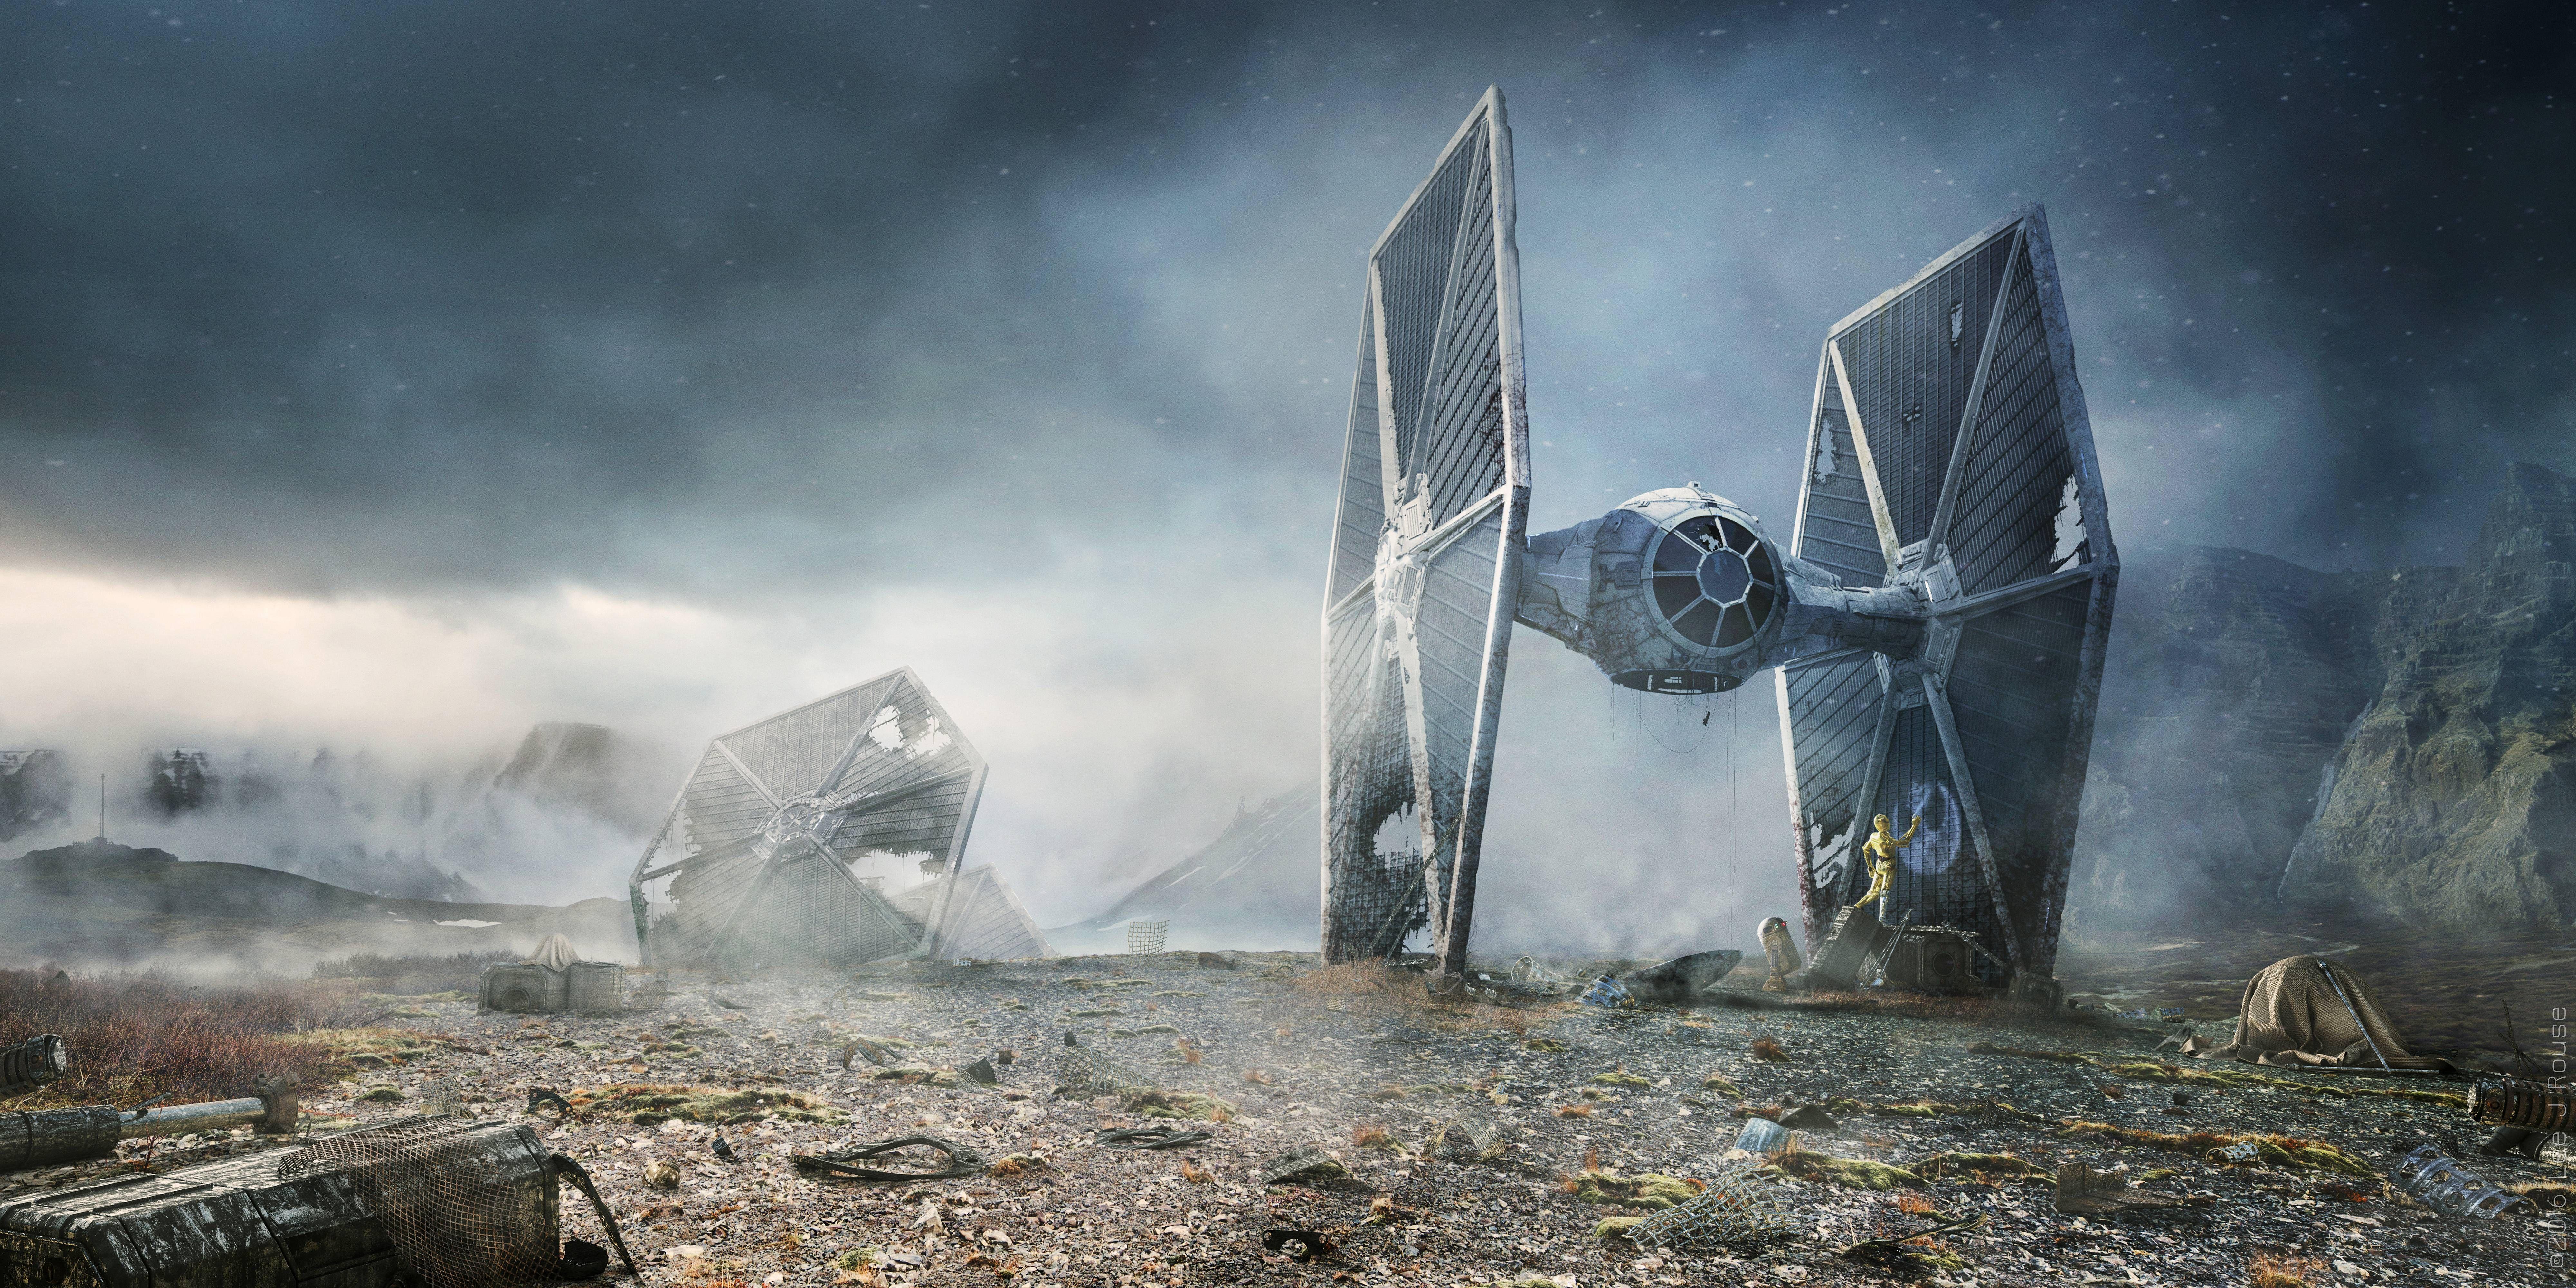 4K Ultra HD Star Wars Wallpaper and Background Image. Звездные войны, Фотографии помолвок, Фэнтези